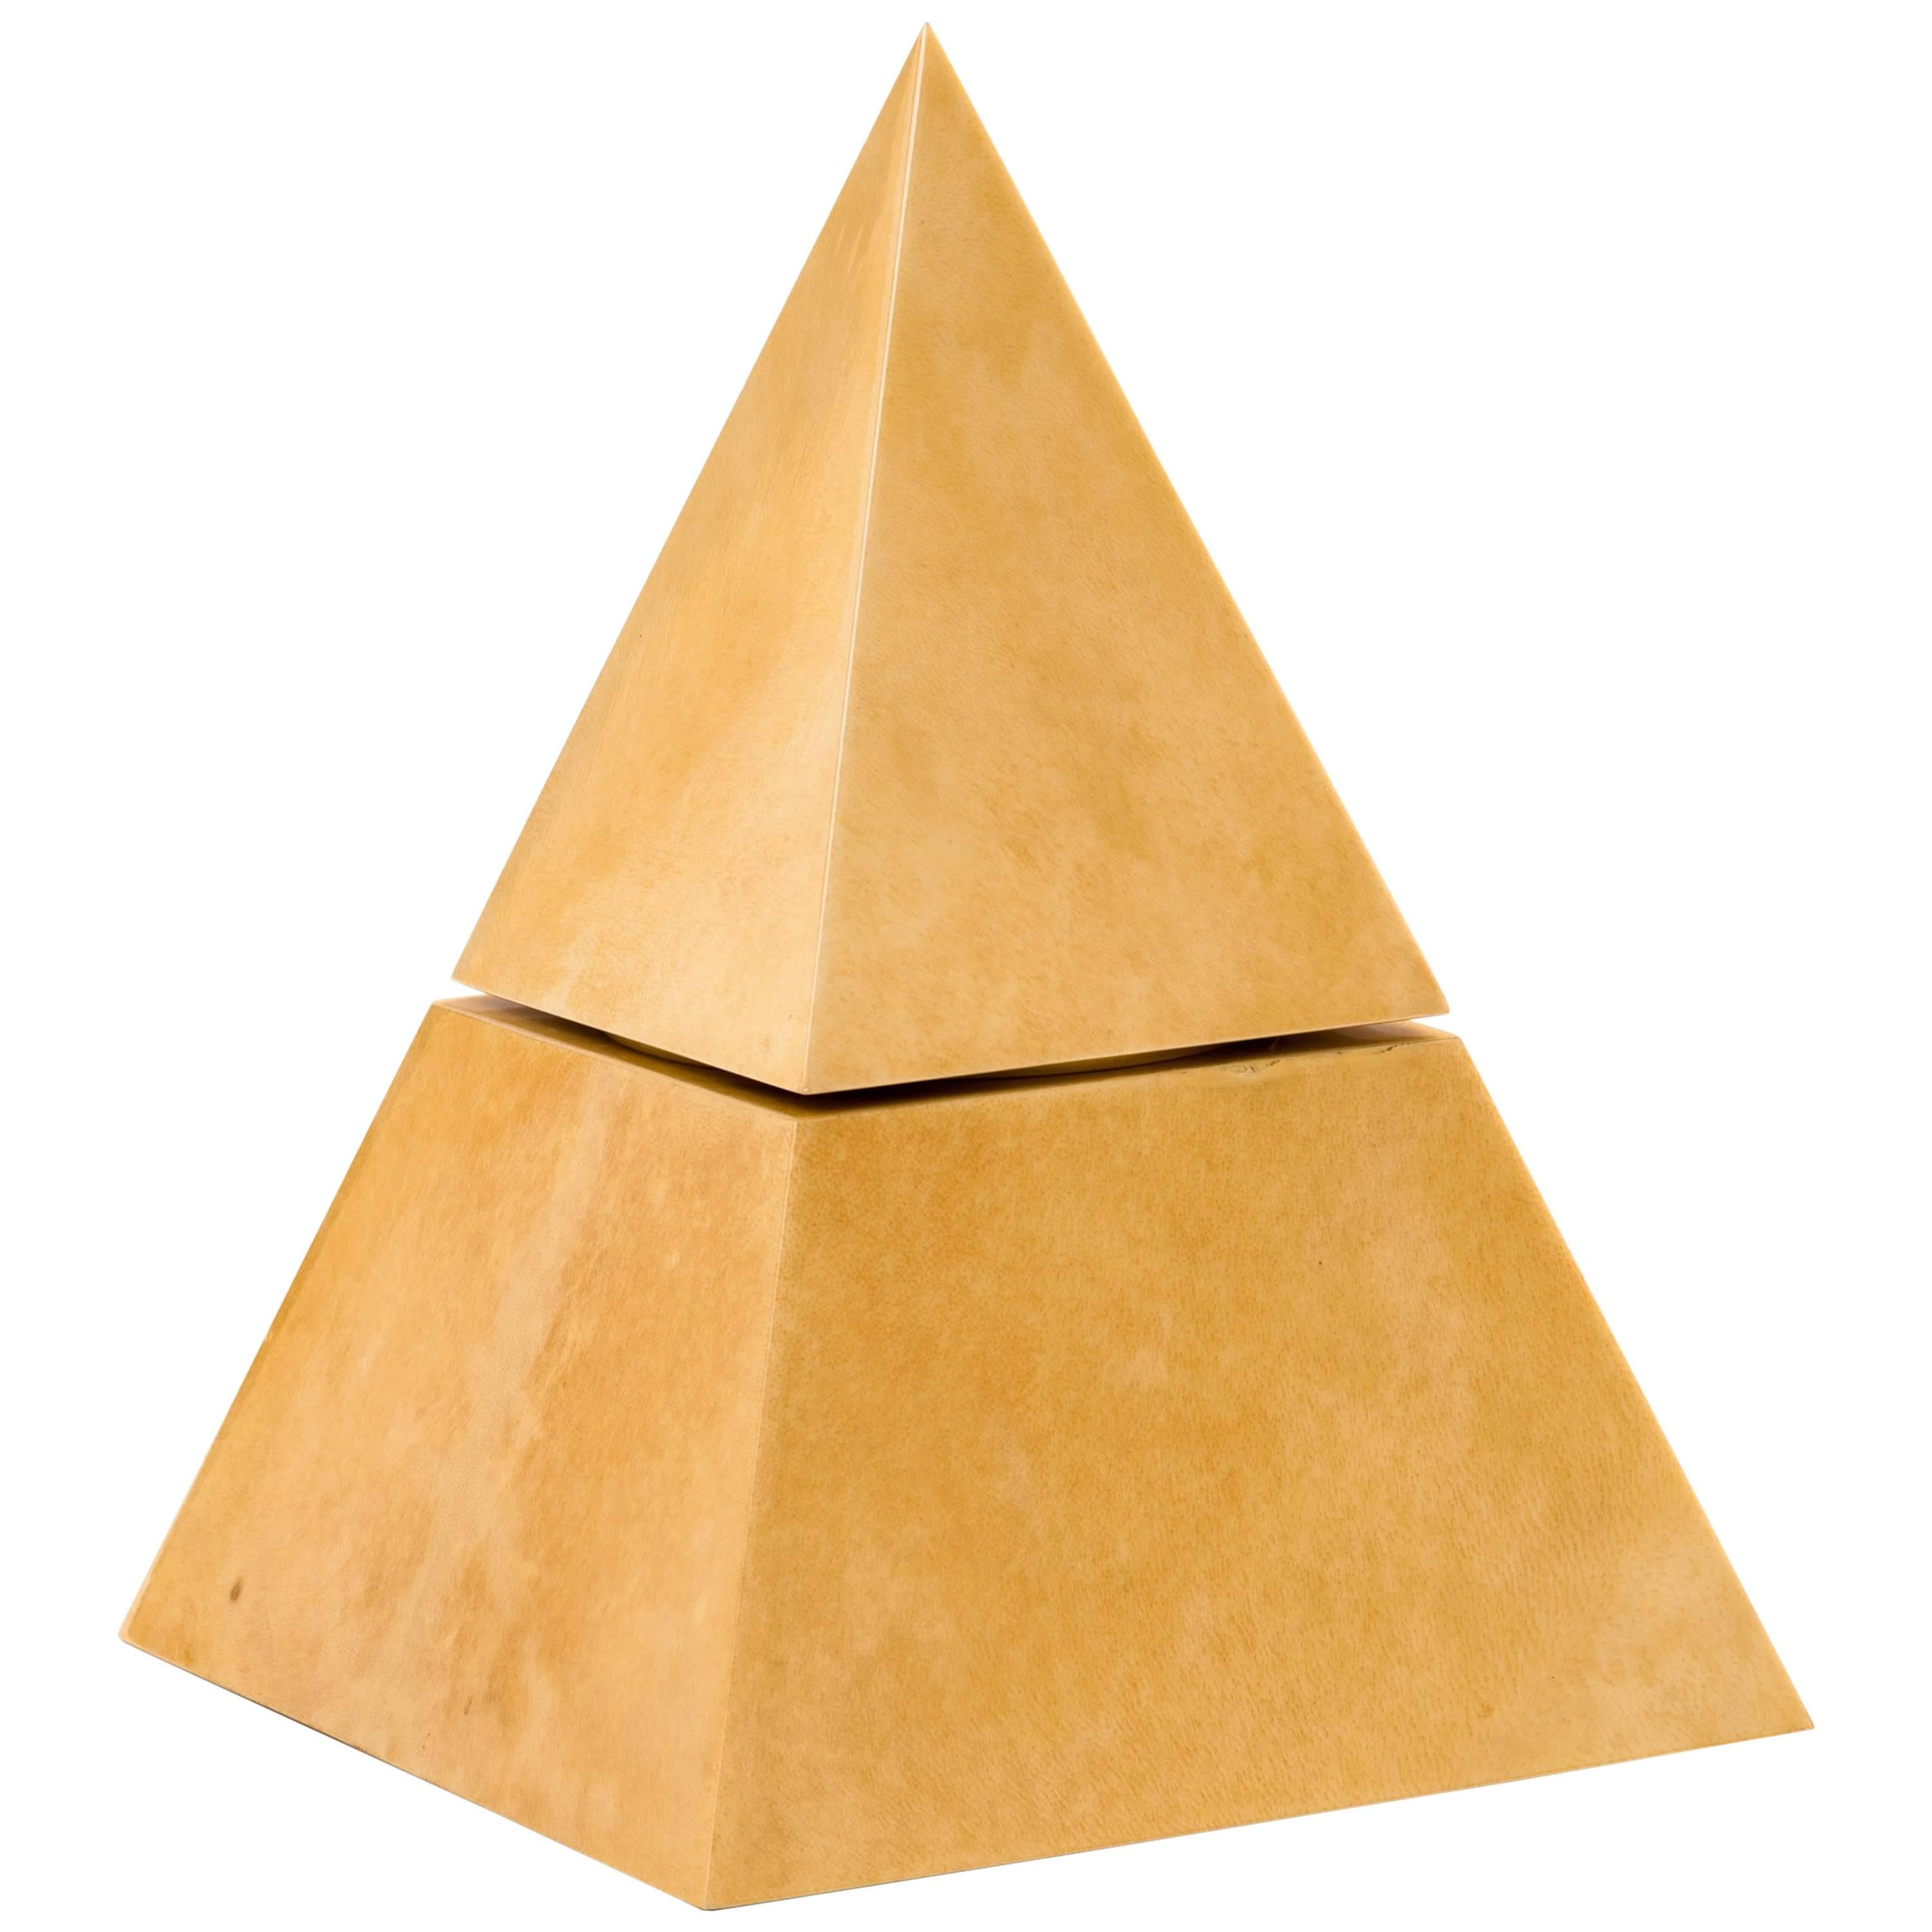 Aldo Tura Lacquered Goatskin Pyramid Ice Bucket or Wine Cooler Sculpture